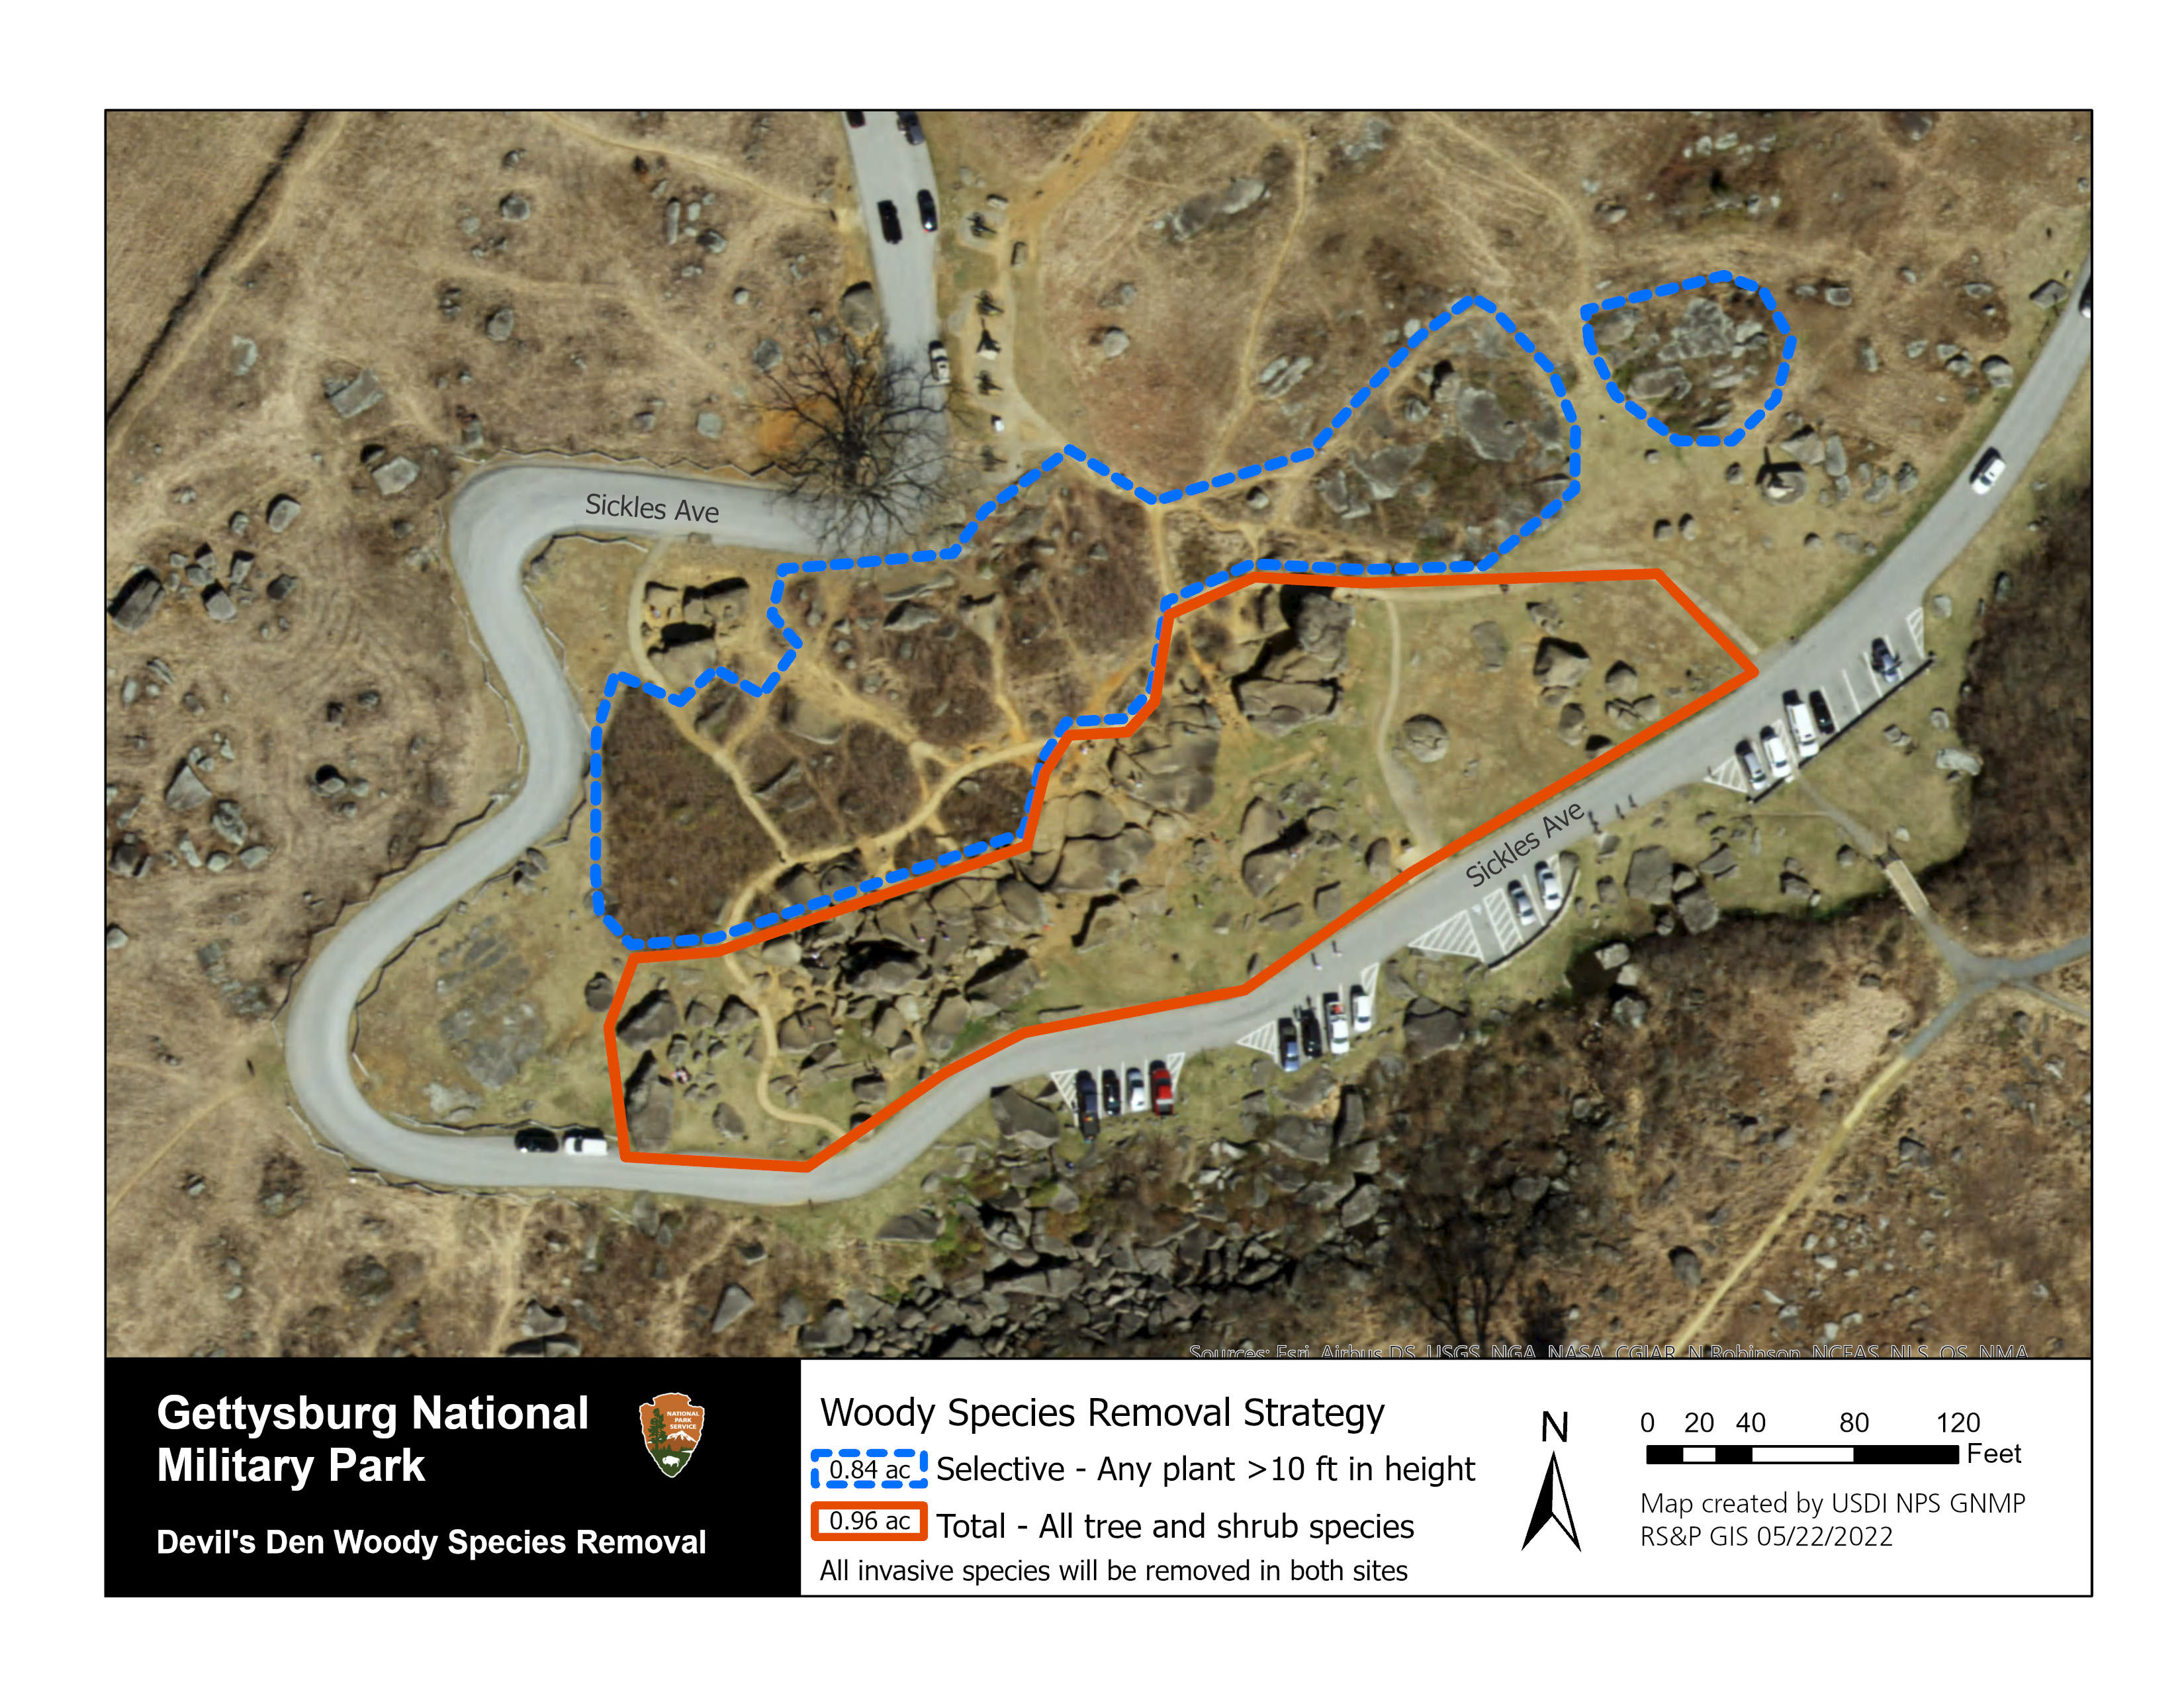 Tour Map of the Devil's Den on the Gettysburg battlefield